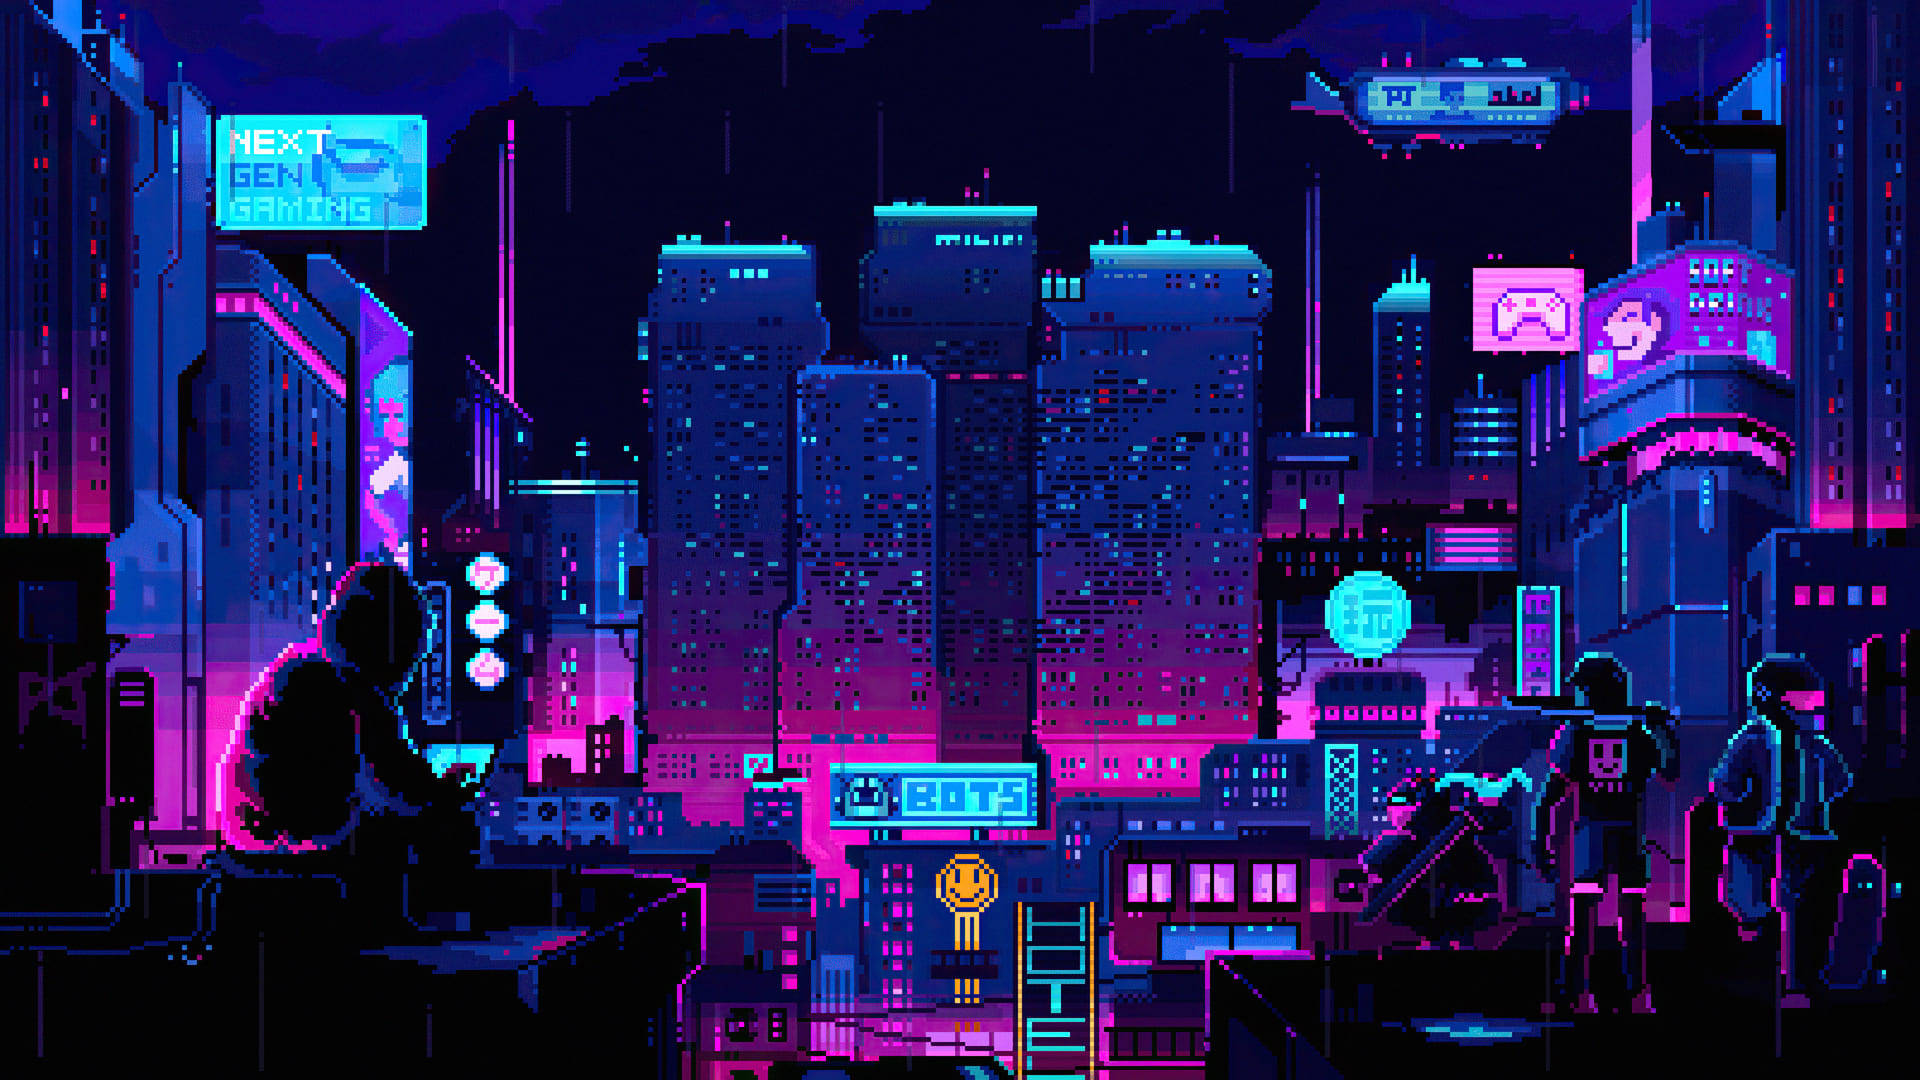 Cyberpunk city background